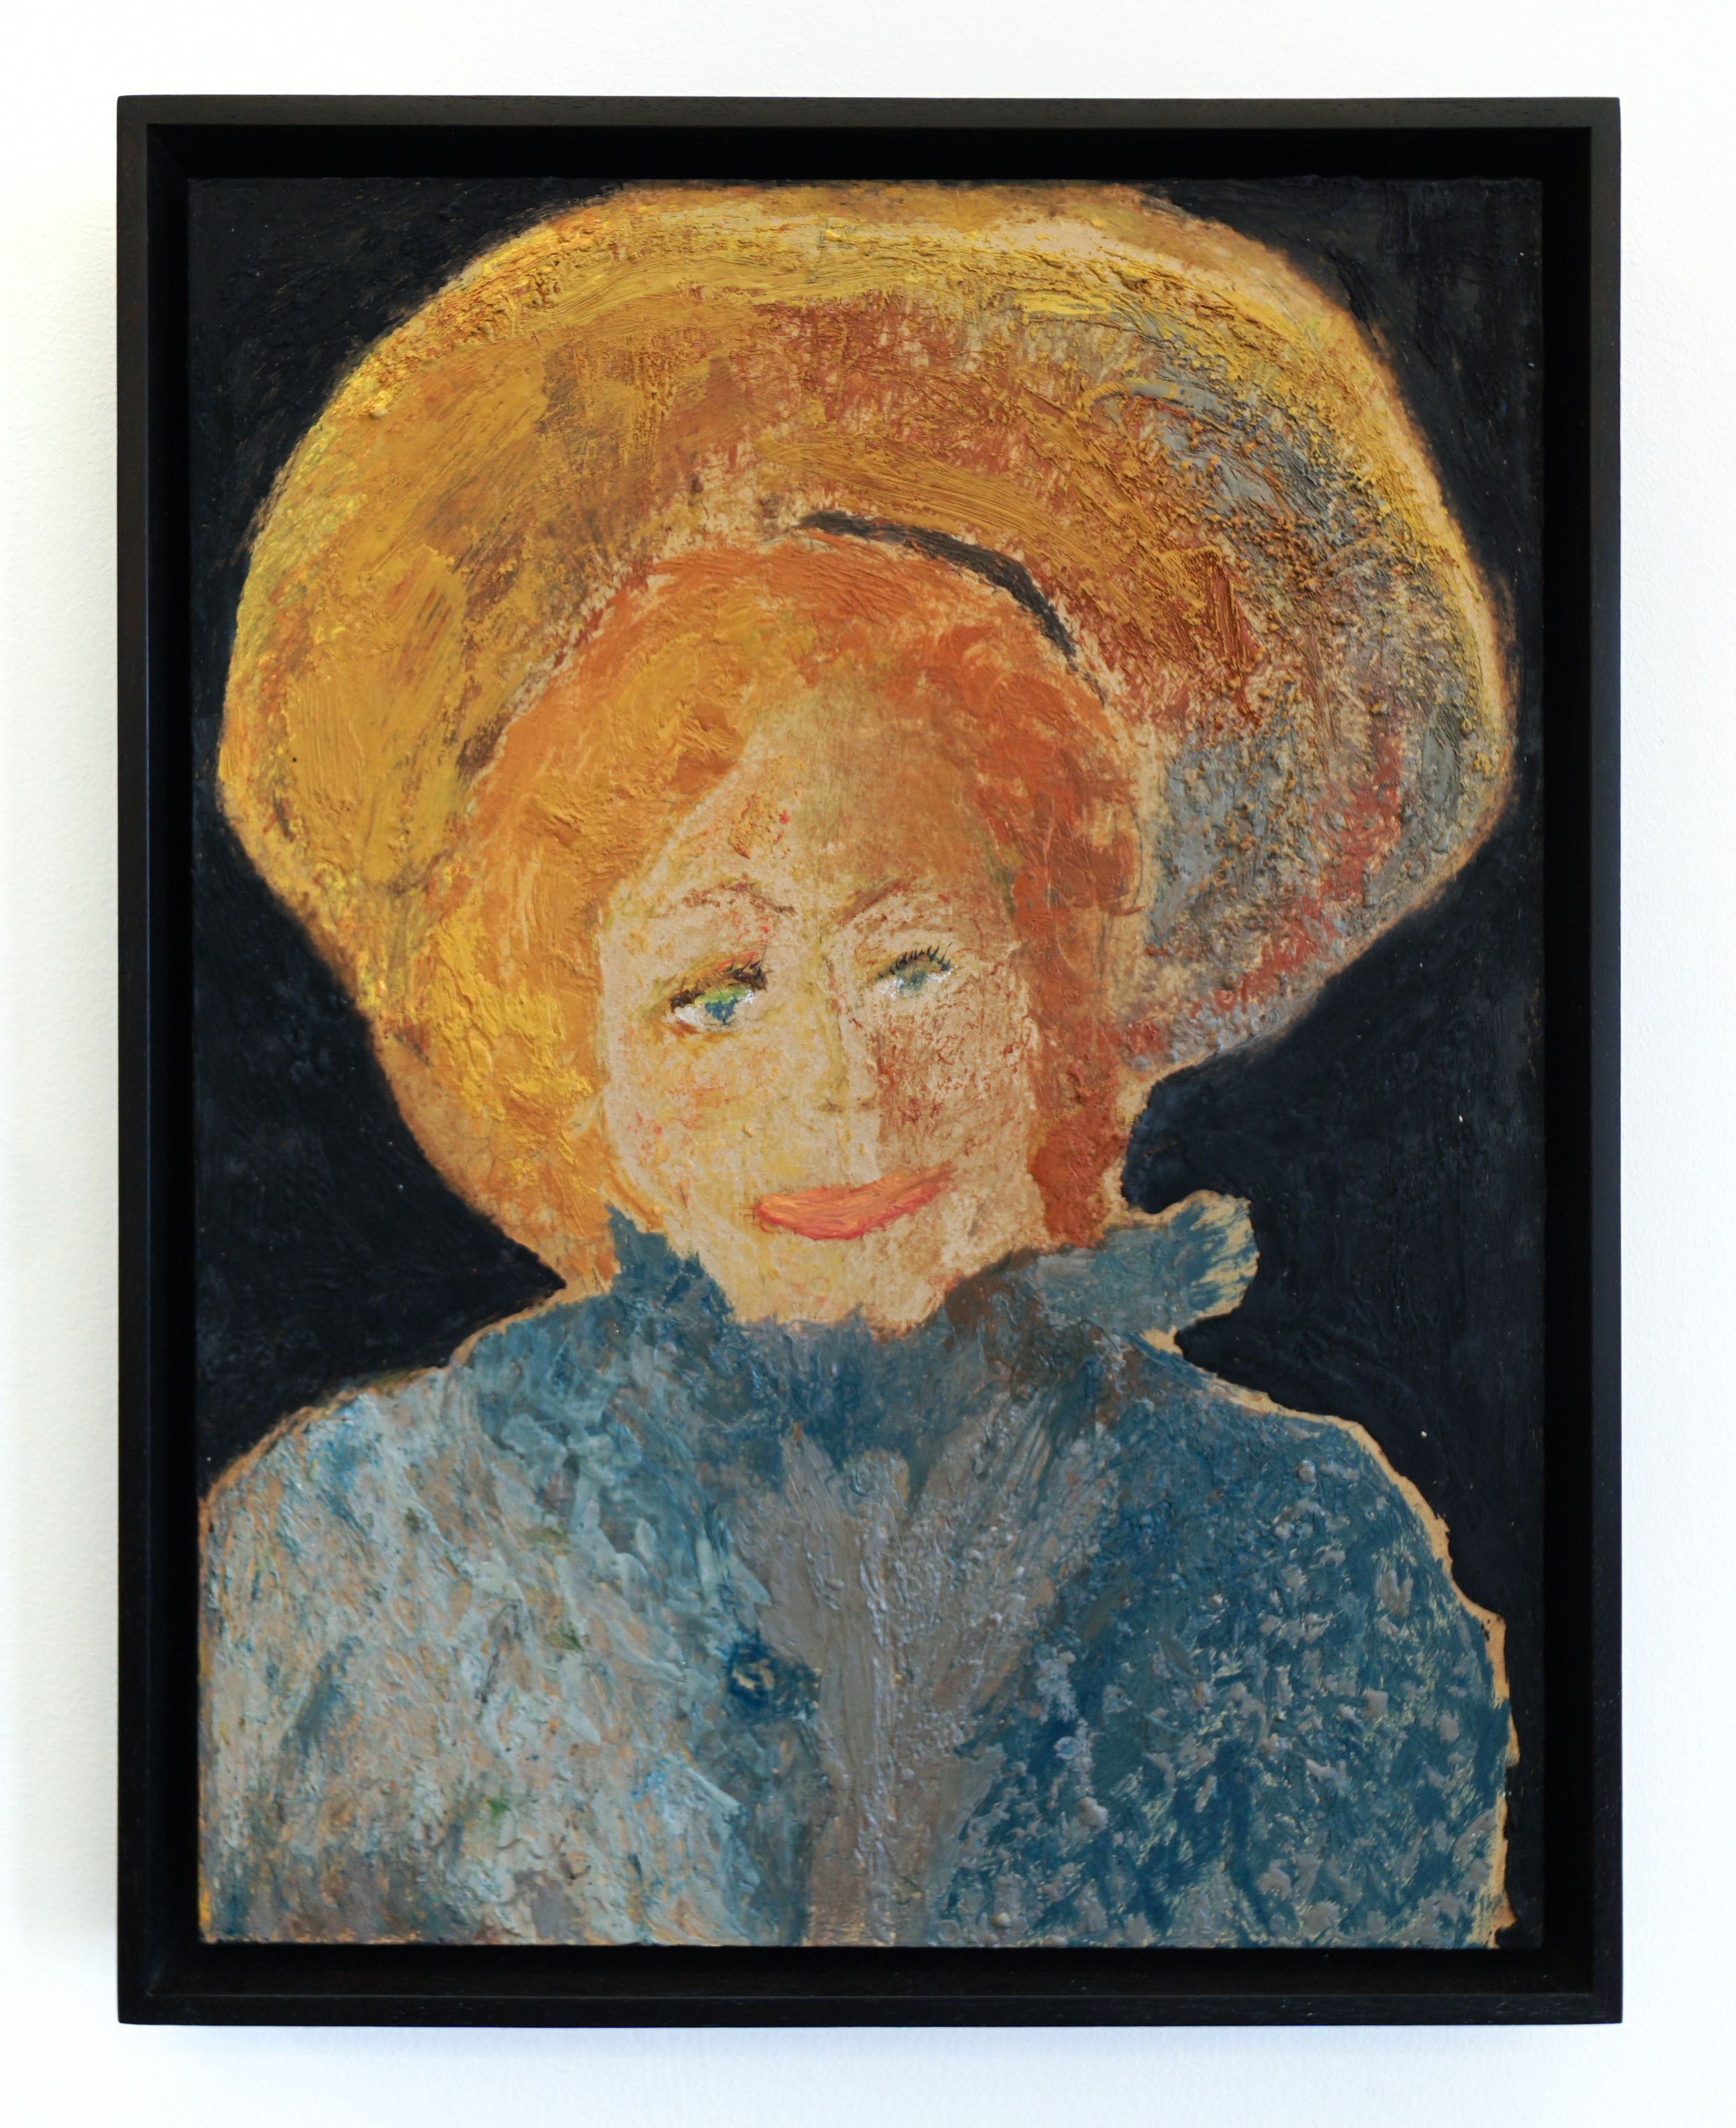  Gertrud Parker  Untitled Self-Portrait , 2018 Encaustic on panel 18.25 x 14 inches 